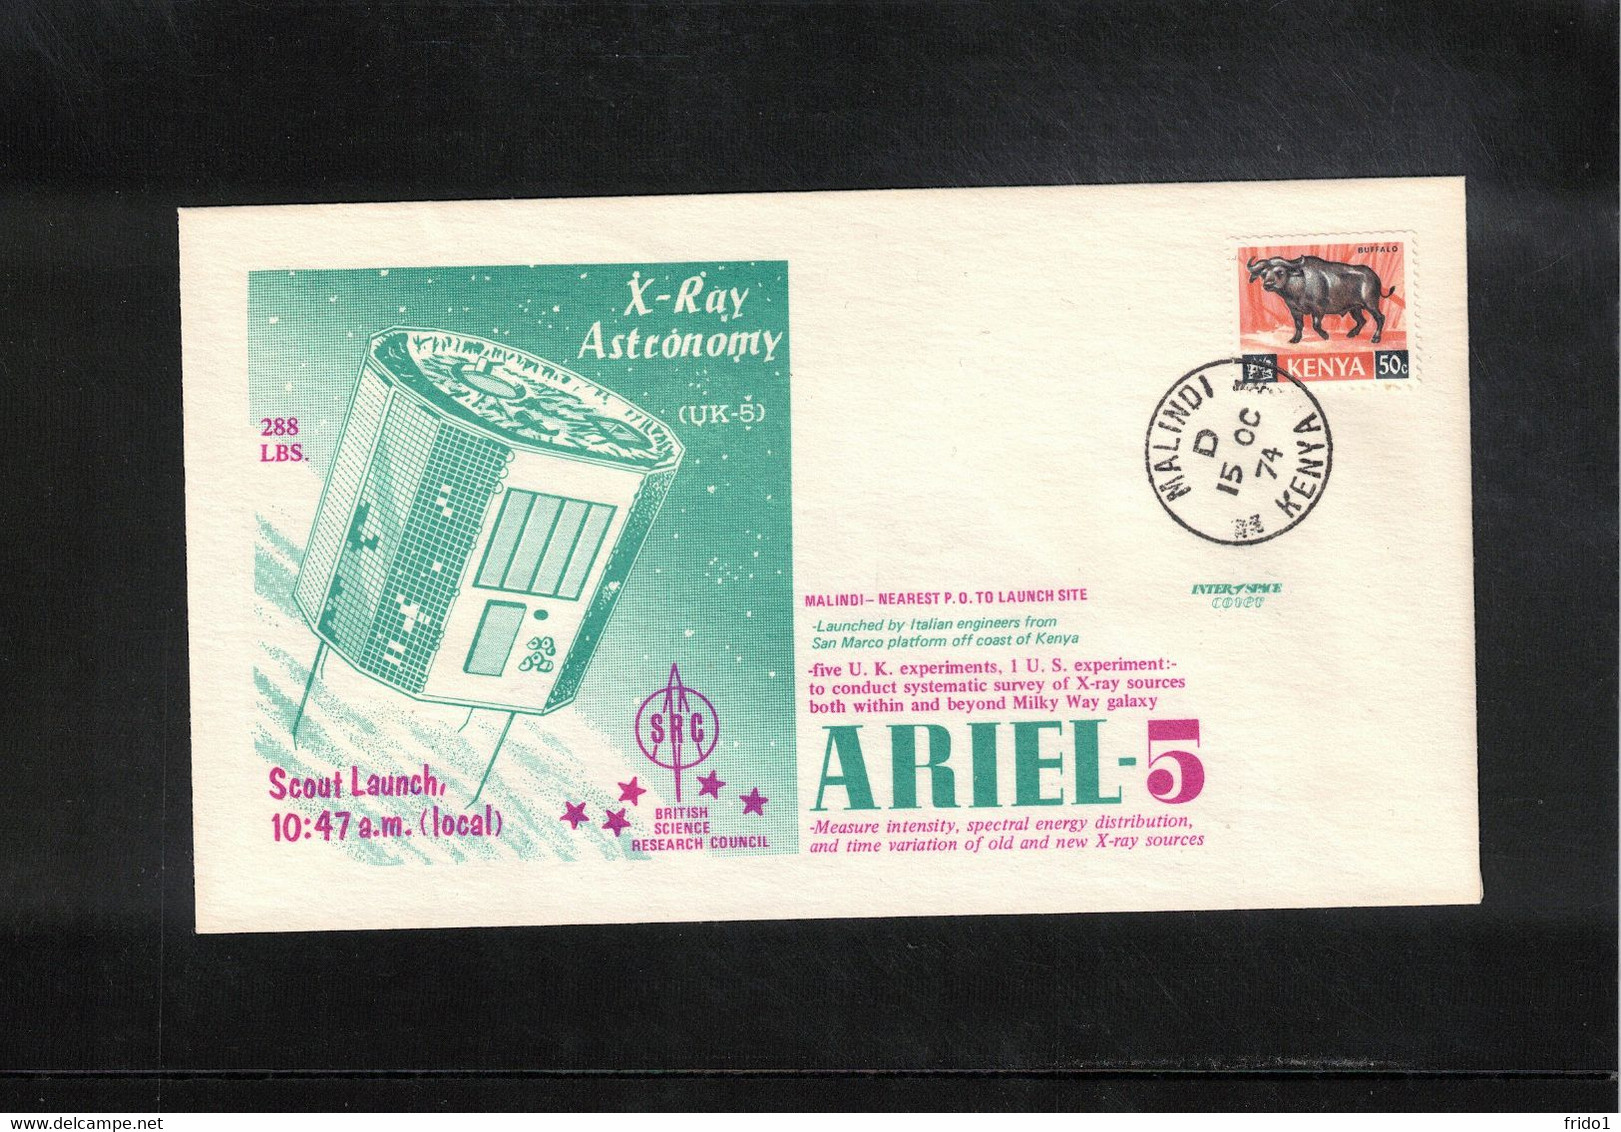 Kenya 1974 Space / Raumfahrt Malindi Launch Site British - USA - Italy Cooperation Satellite ARIEL -5 Interesting Letter - Africa